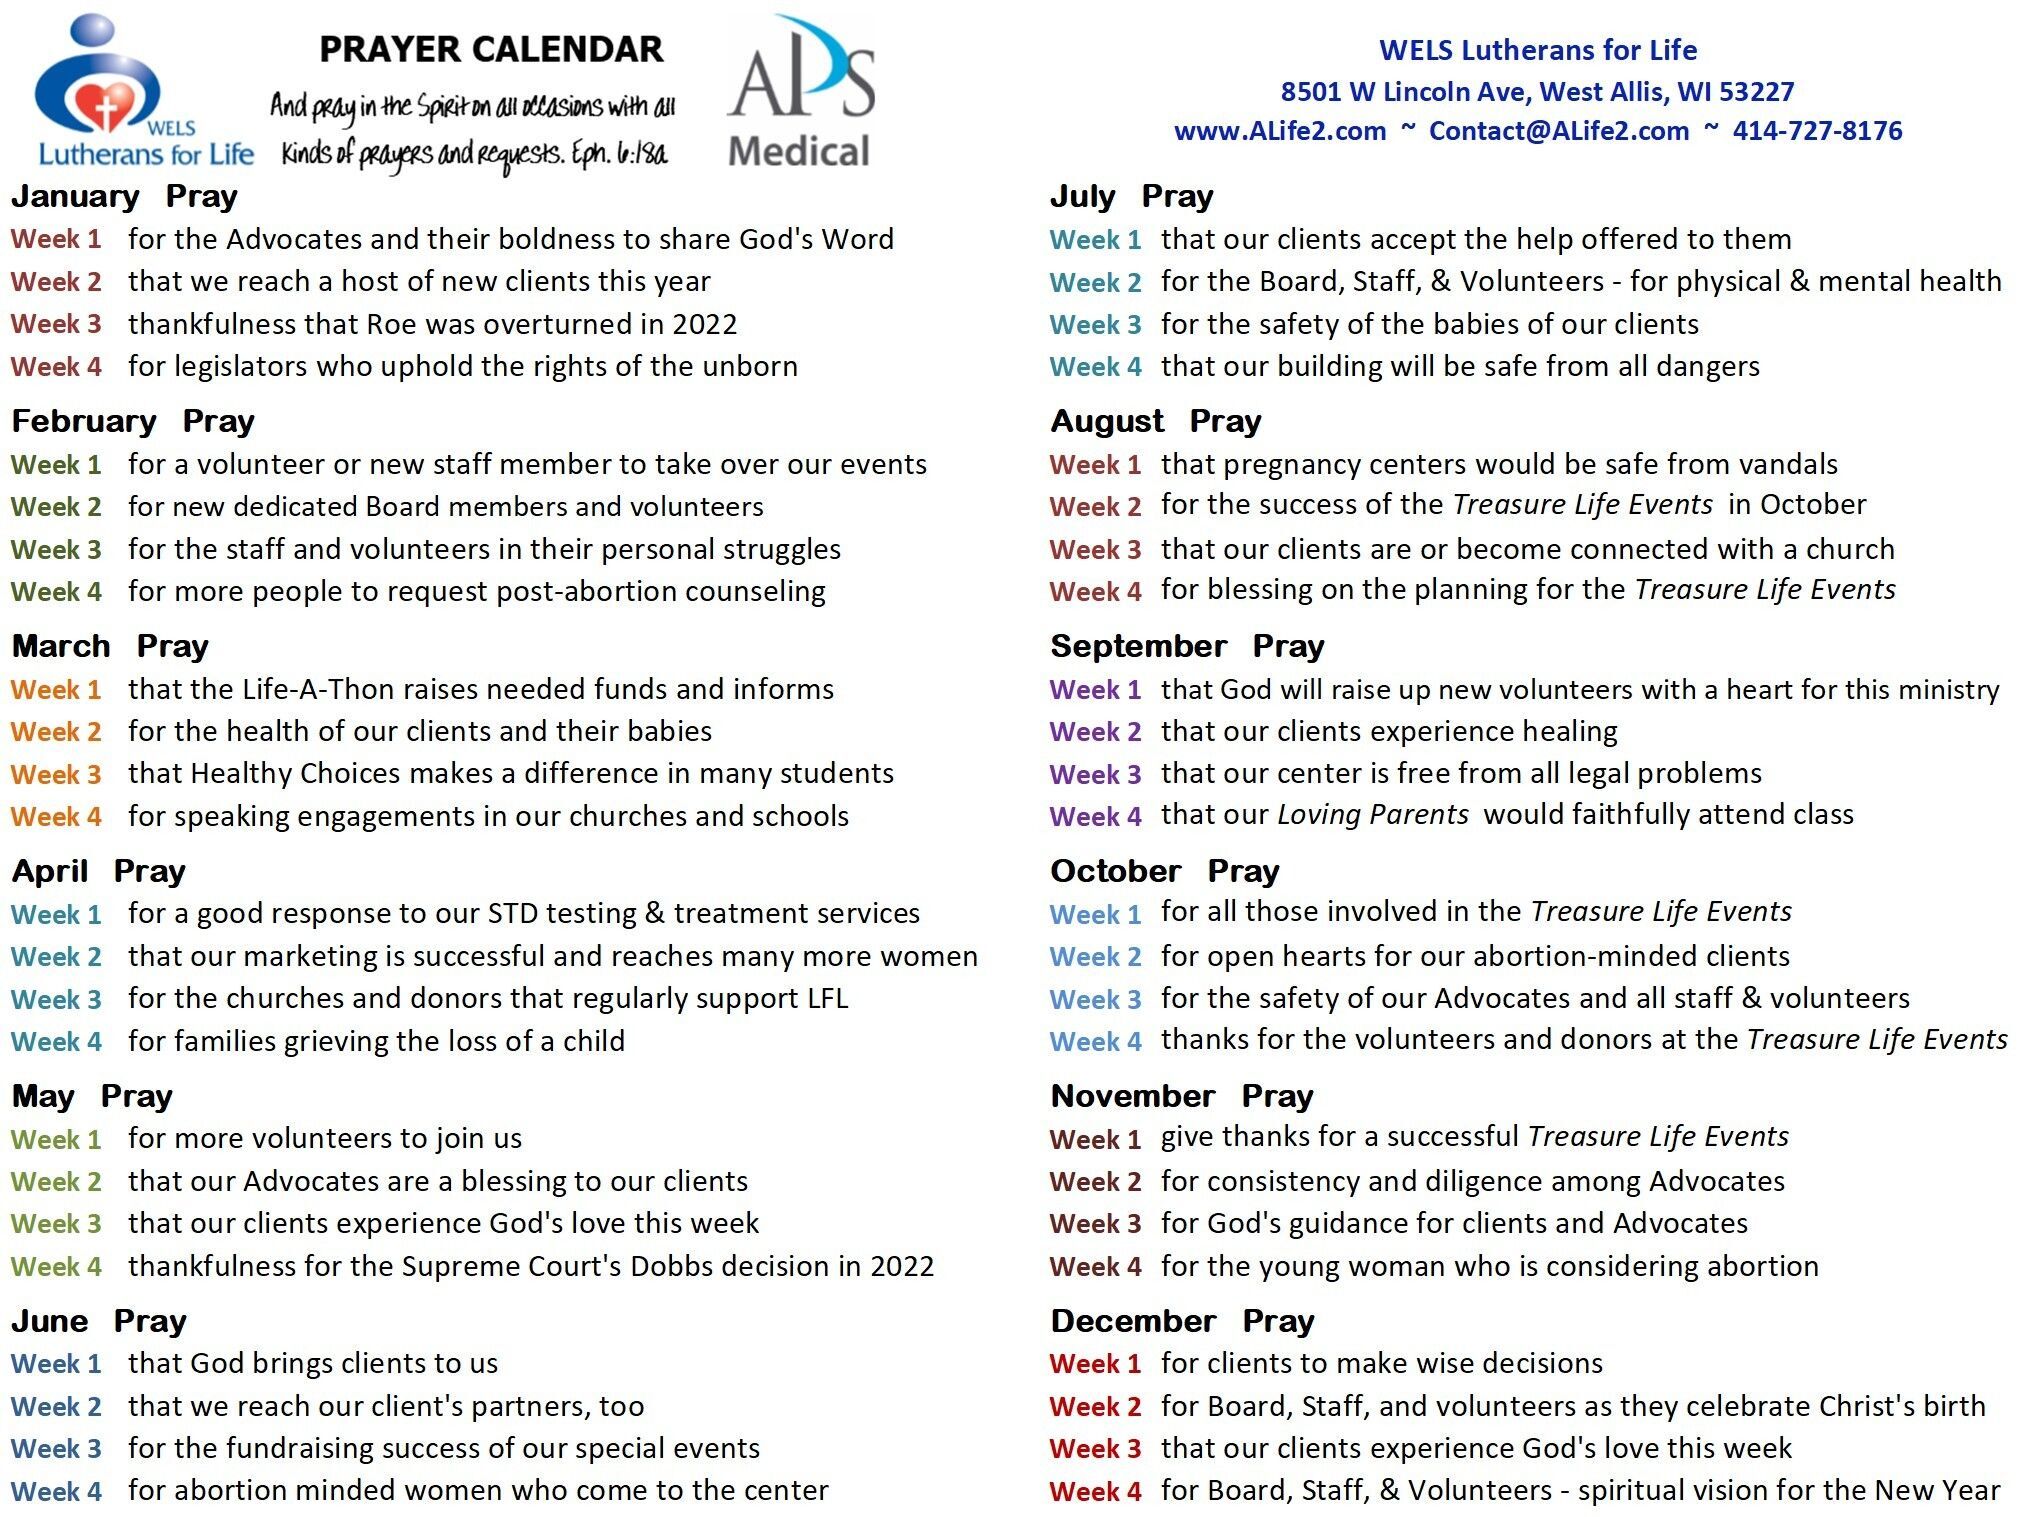 Annual Prayer Calendar